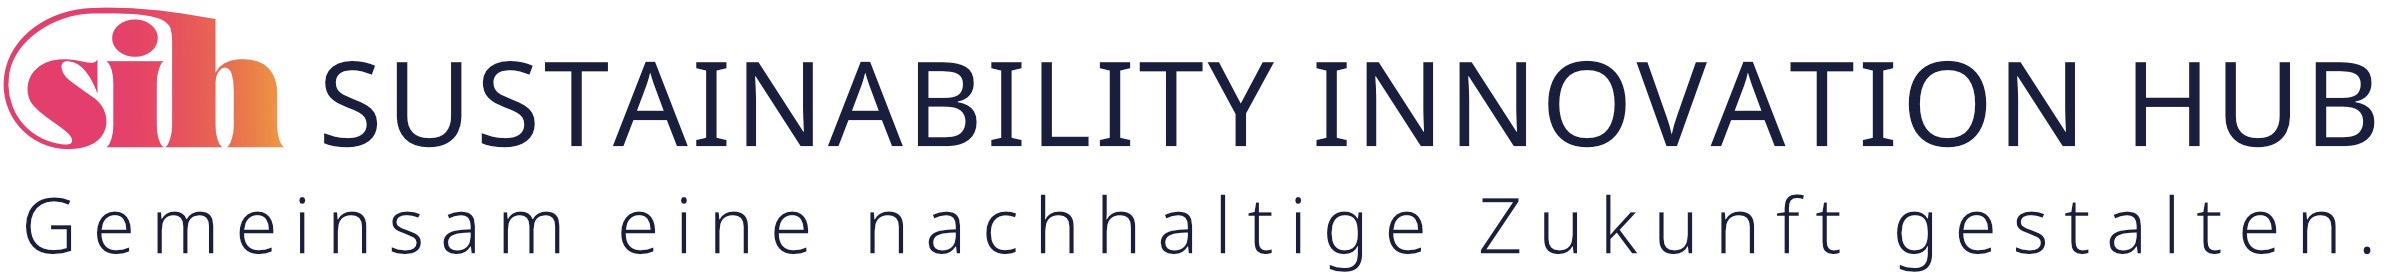 sustainability-innovation-hub-logo